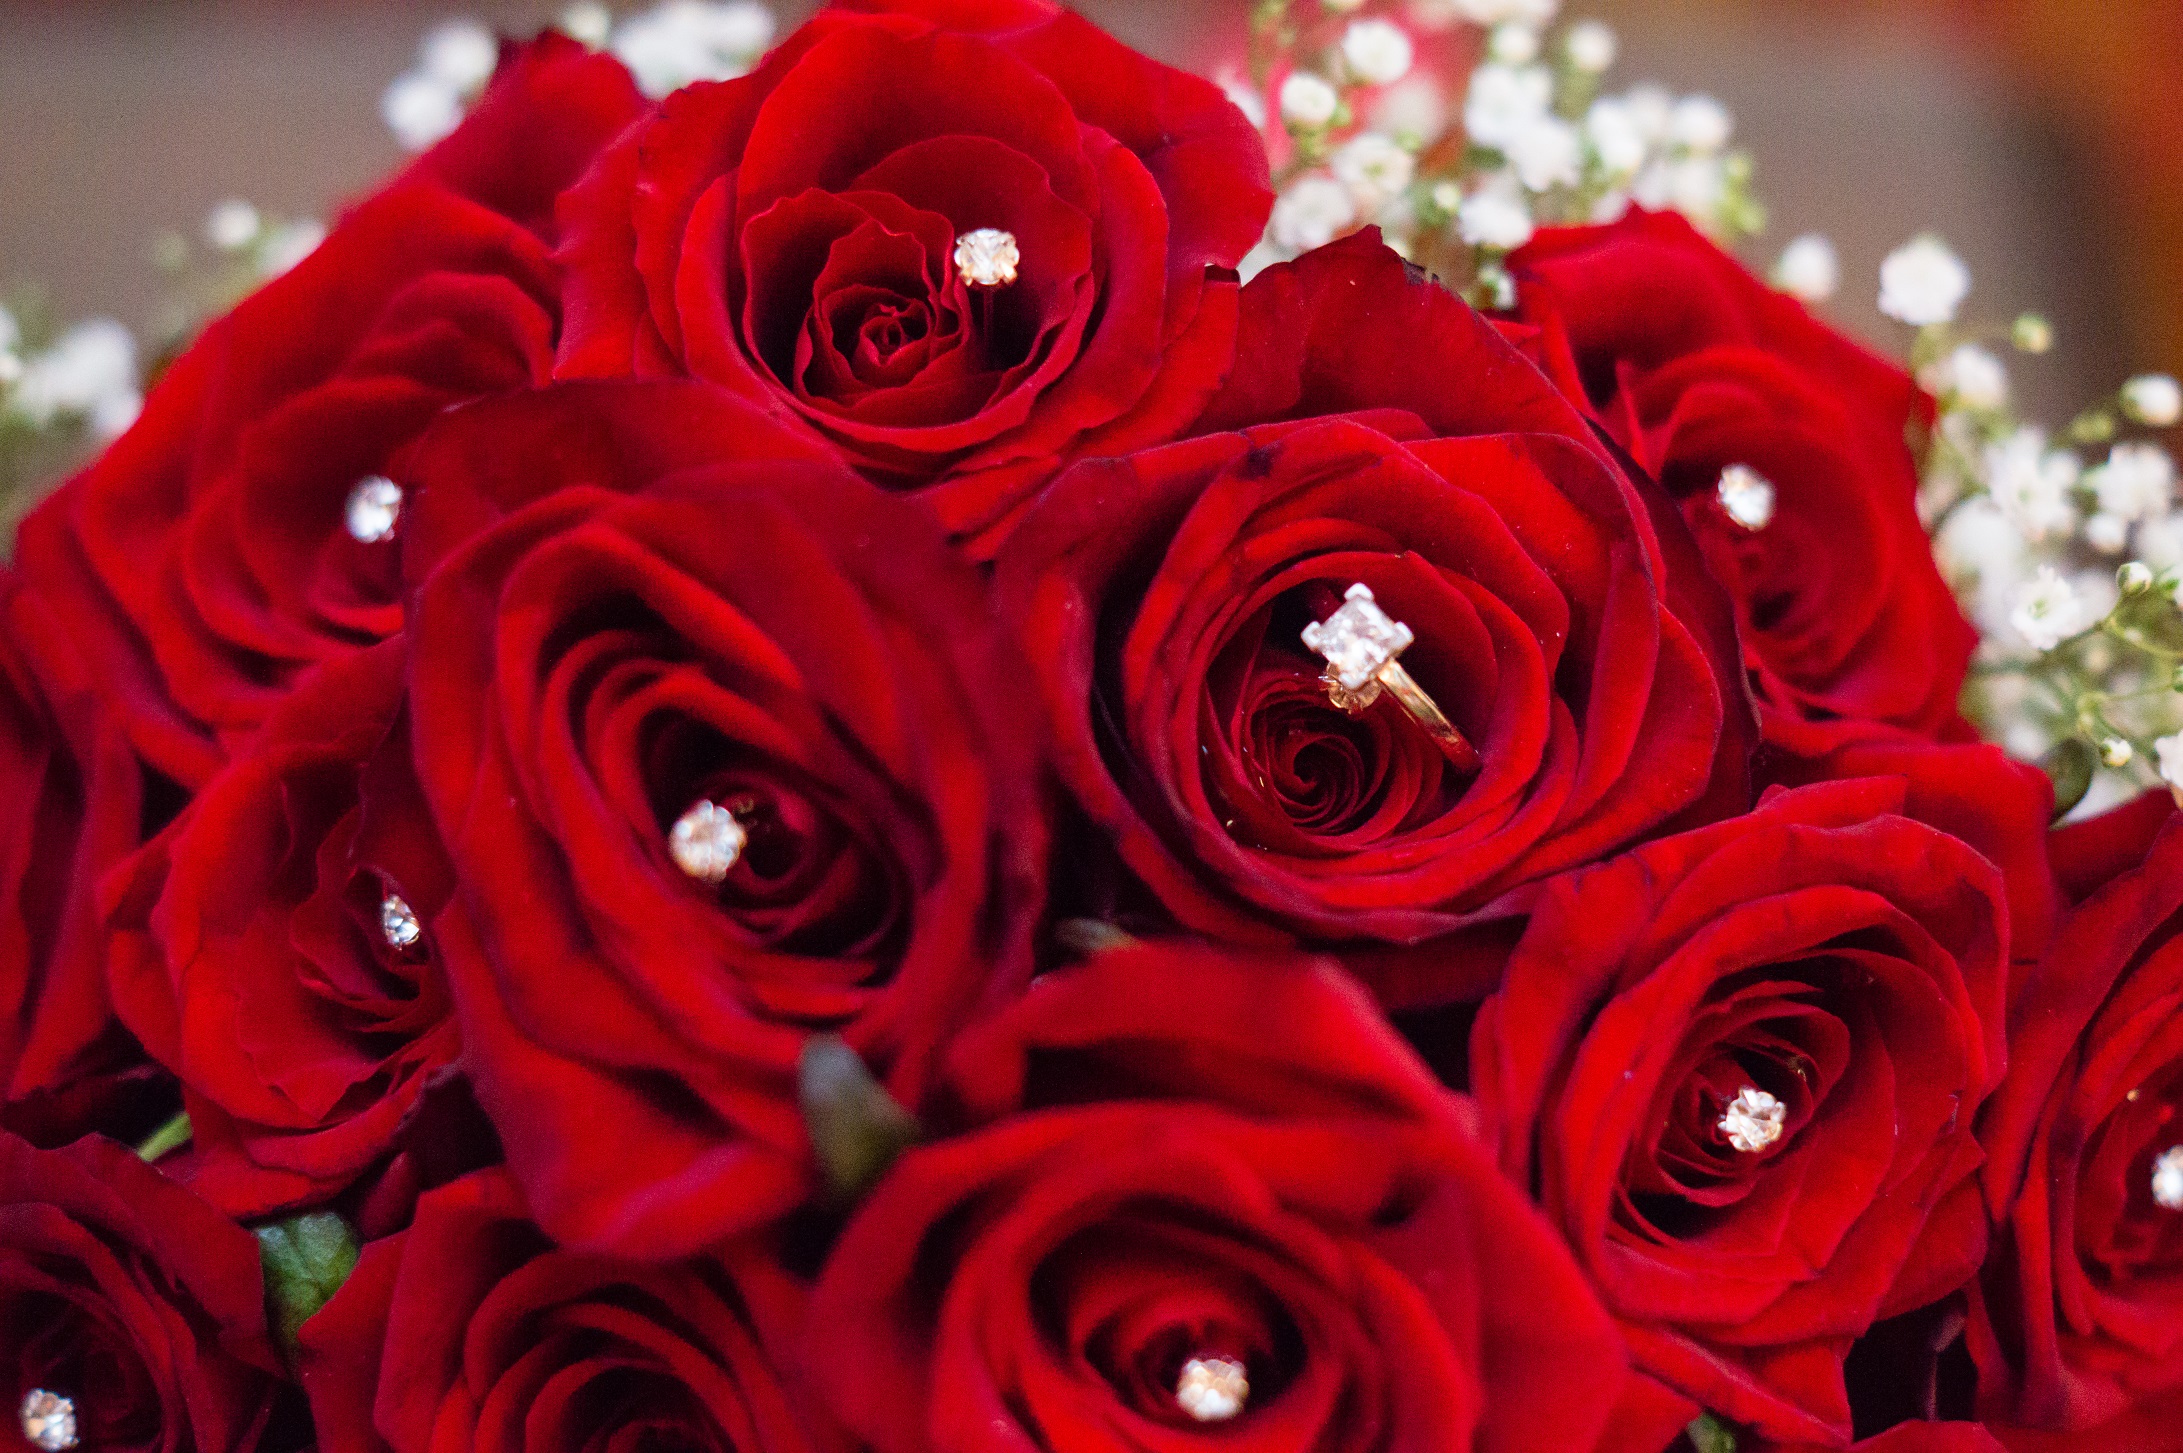 Hanbury Manor Wedding, Hertfordshire, red rose wedding flowers, diamond ring